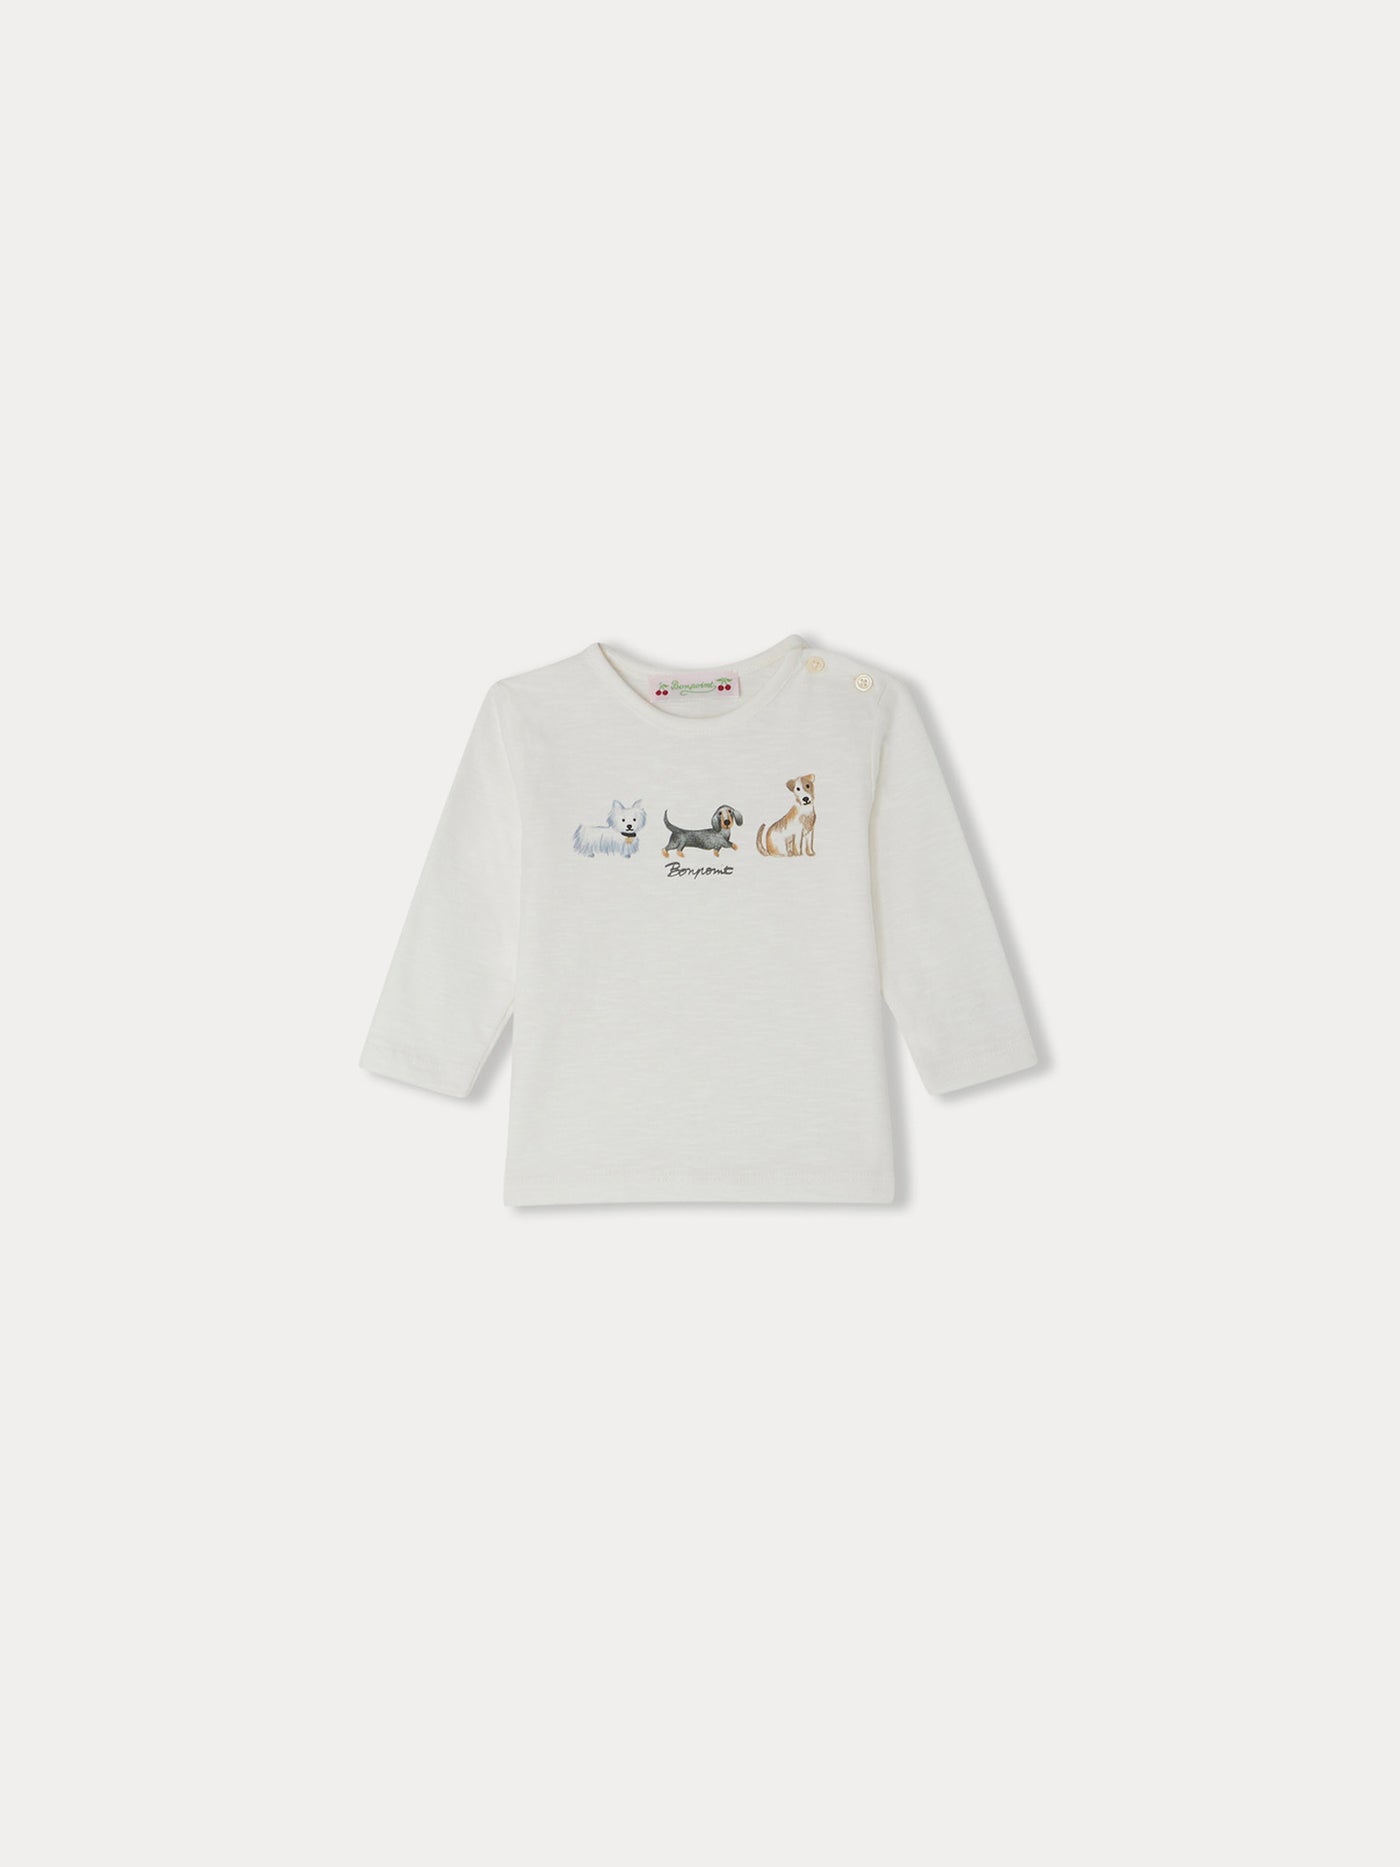 Tahsin baby t-shirt with animal designs